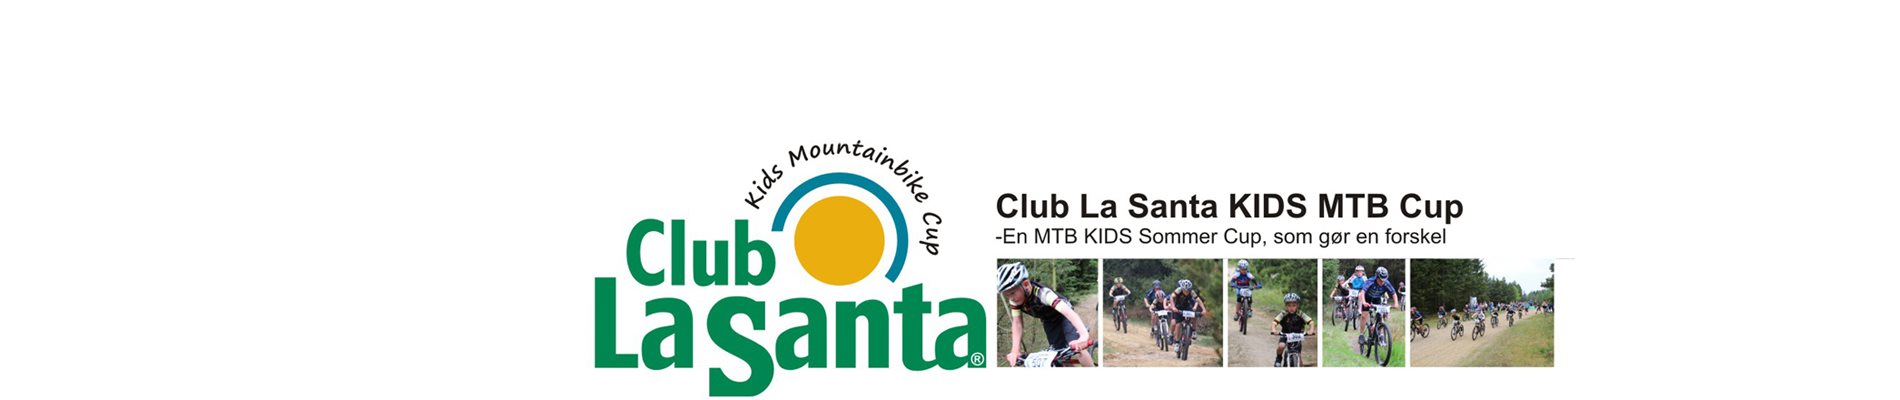 CLUB LA SANTA KIDS MTB CUP '18 - Samlet CUP